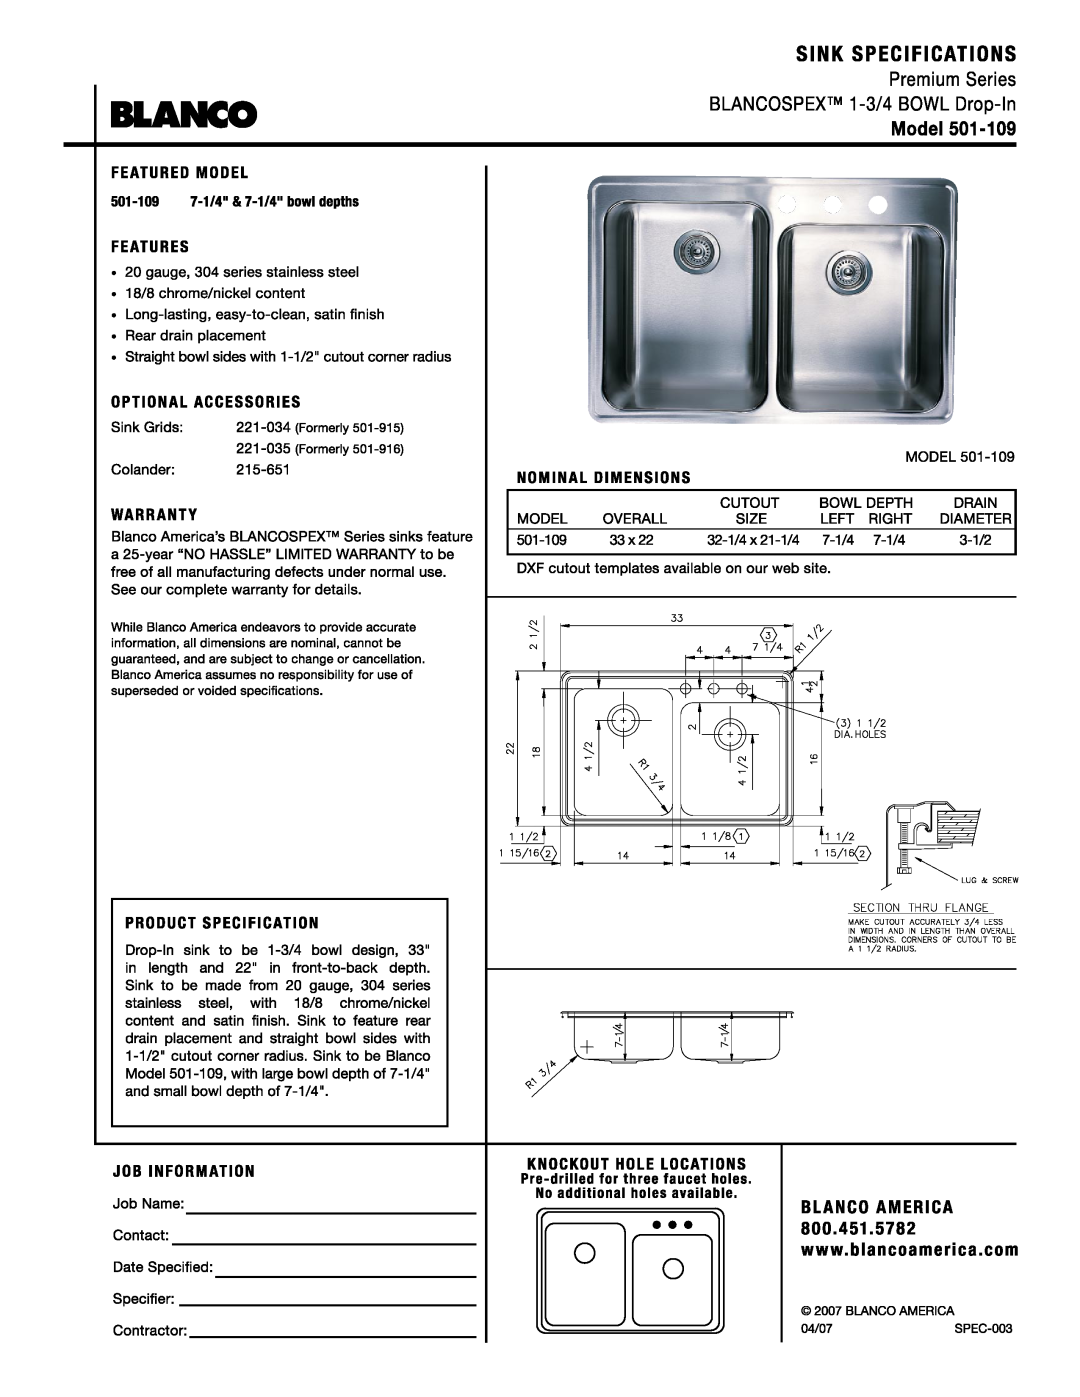 Blanco 501-109 manual 